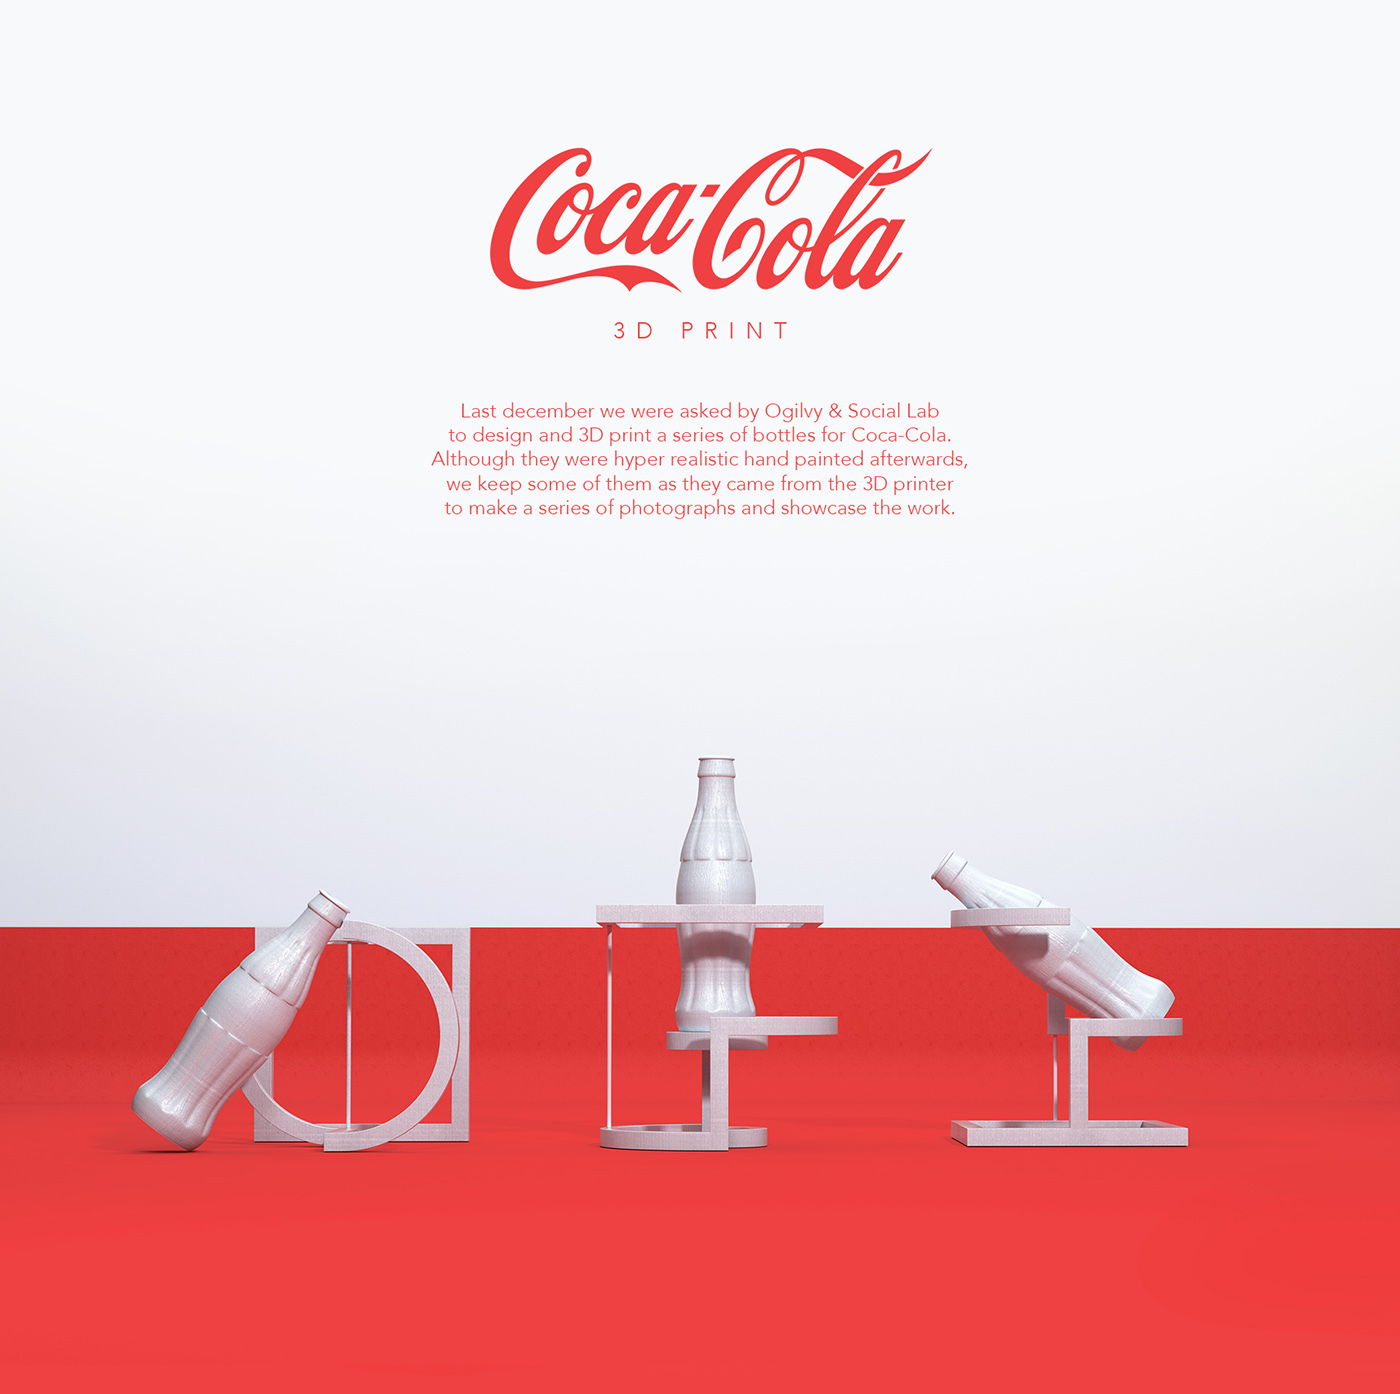 3D 3d print 3d printing Coca-Cola coke still life red inspire Canon CGI